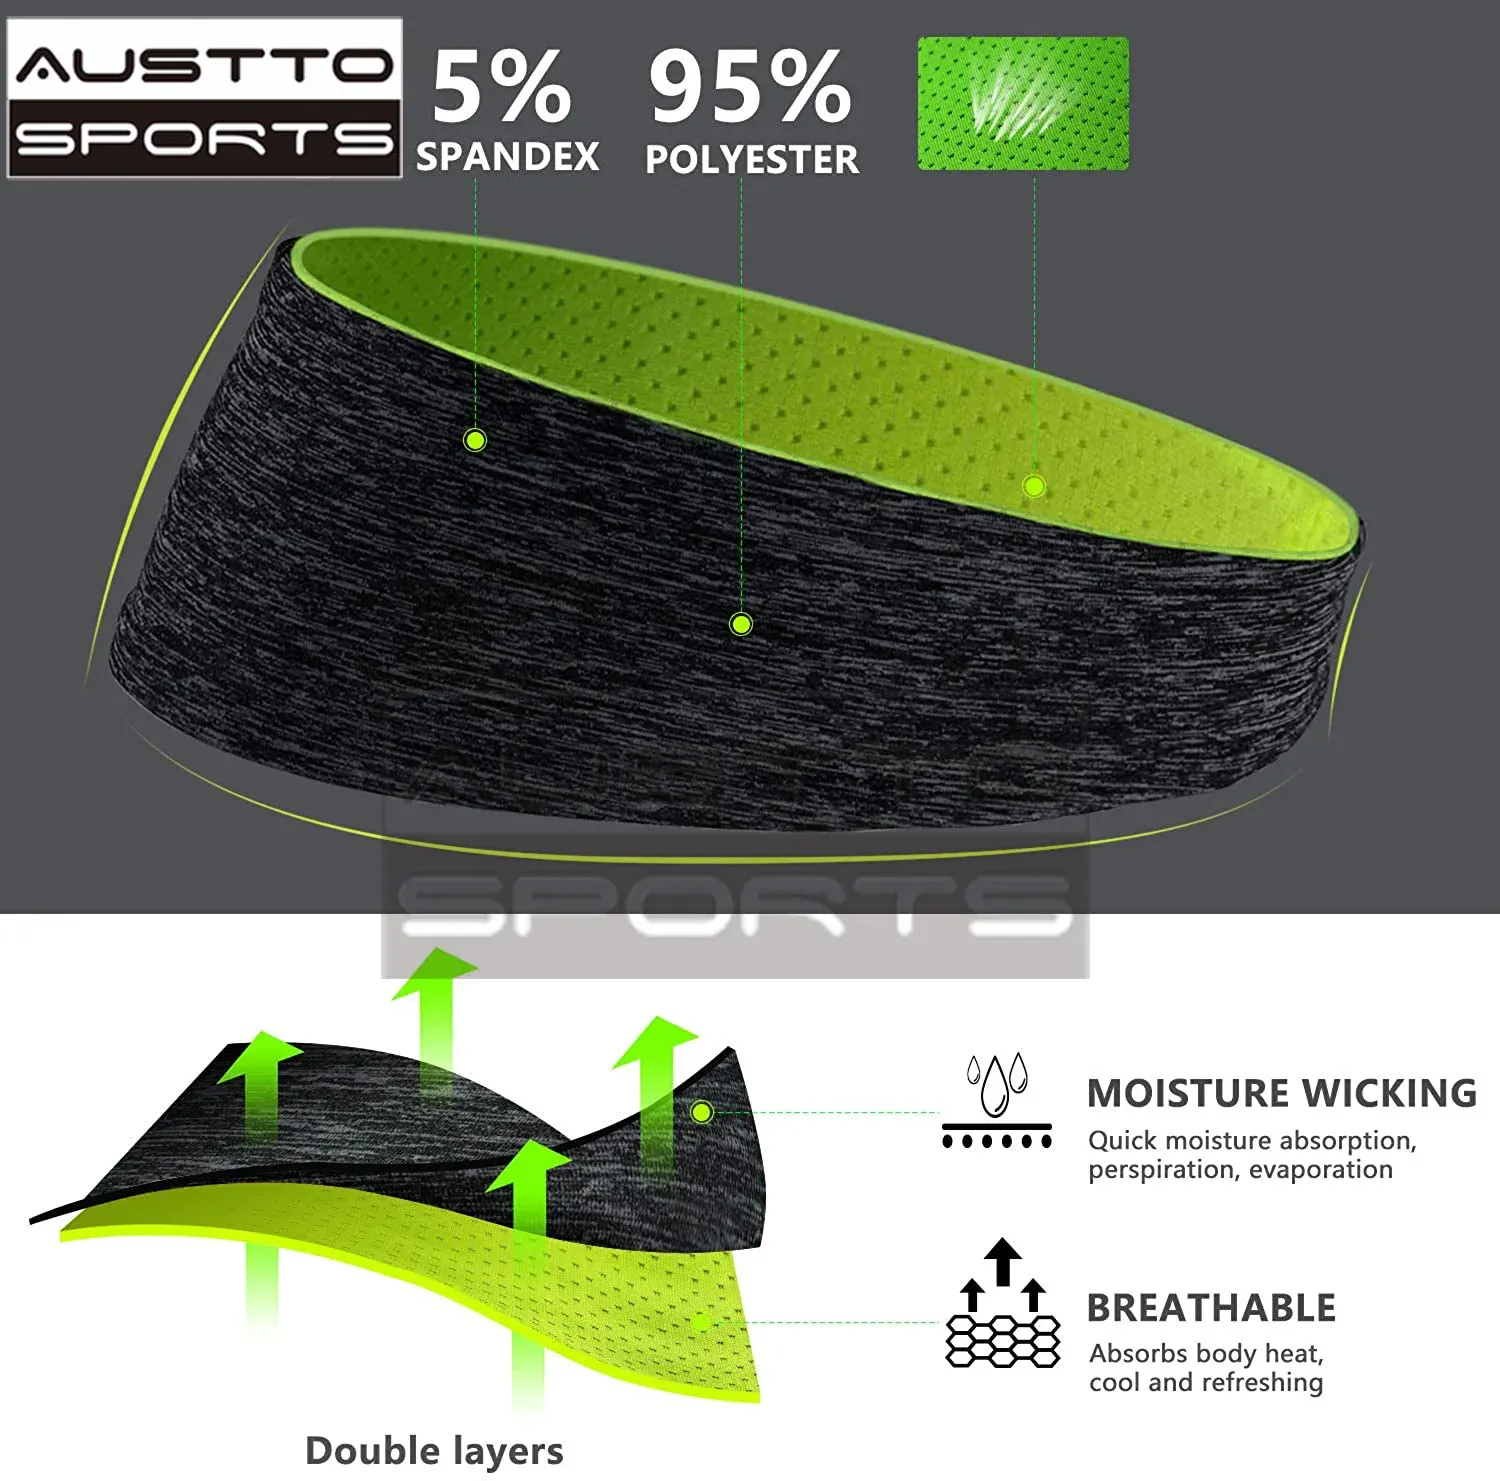 Austto Sports Headband Slim Workout Cooling Sweatband for Men Women Running Sycling Outdoor Sport